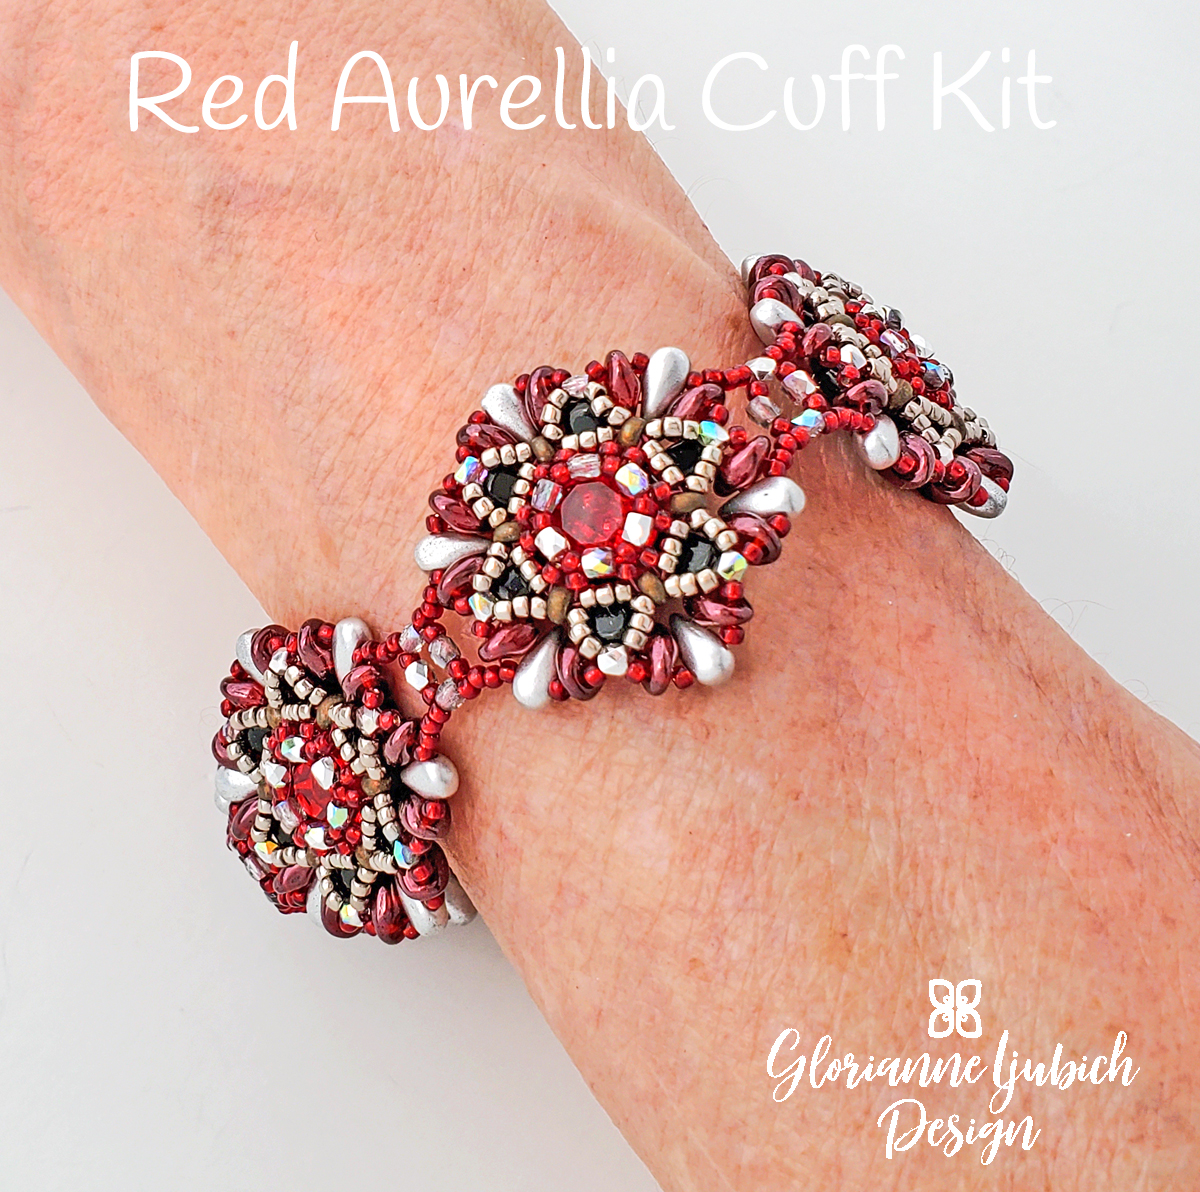 Red Aurellia Cuff Shaped Bead Kit